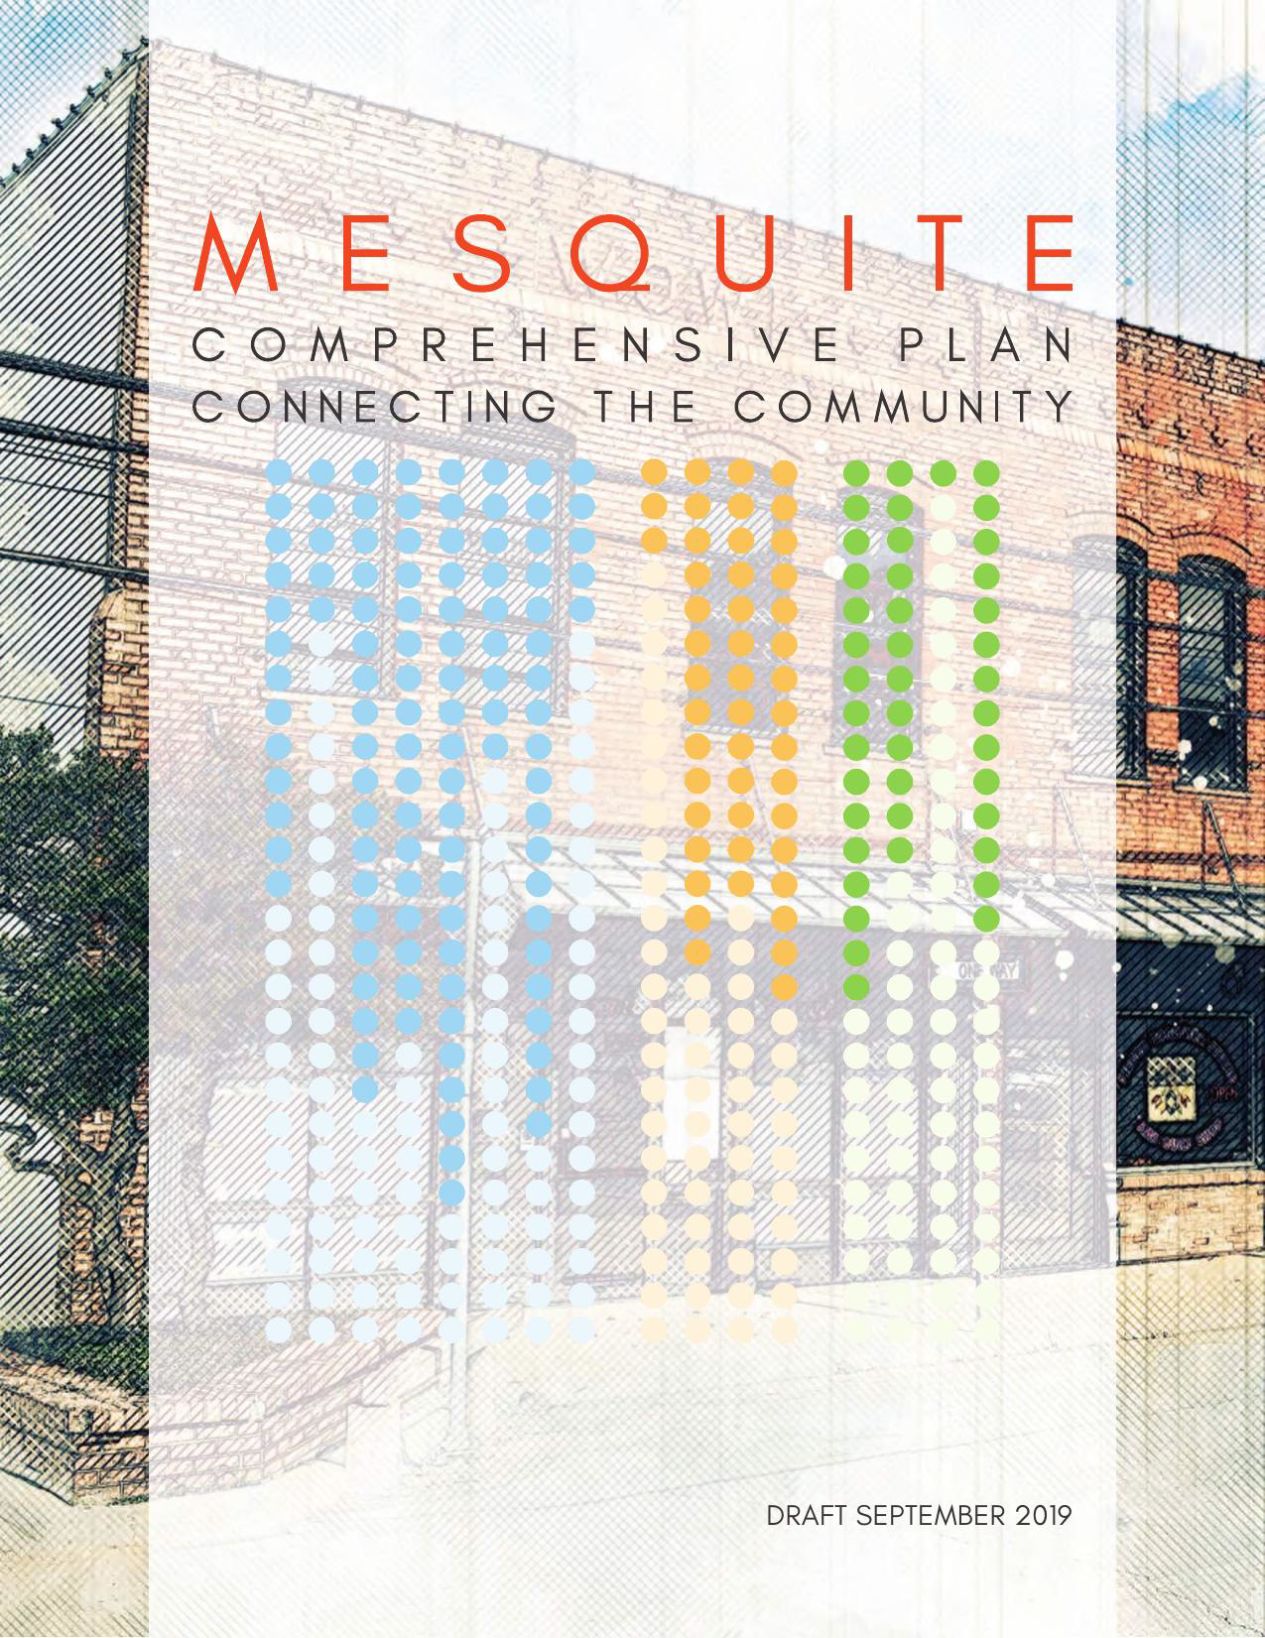 Mesquite Council approves new Comprehensive Plan